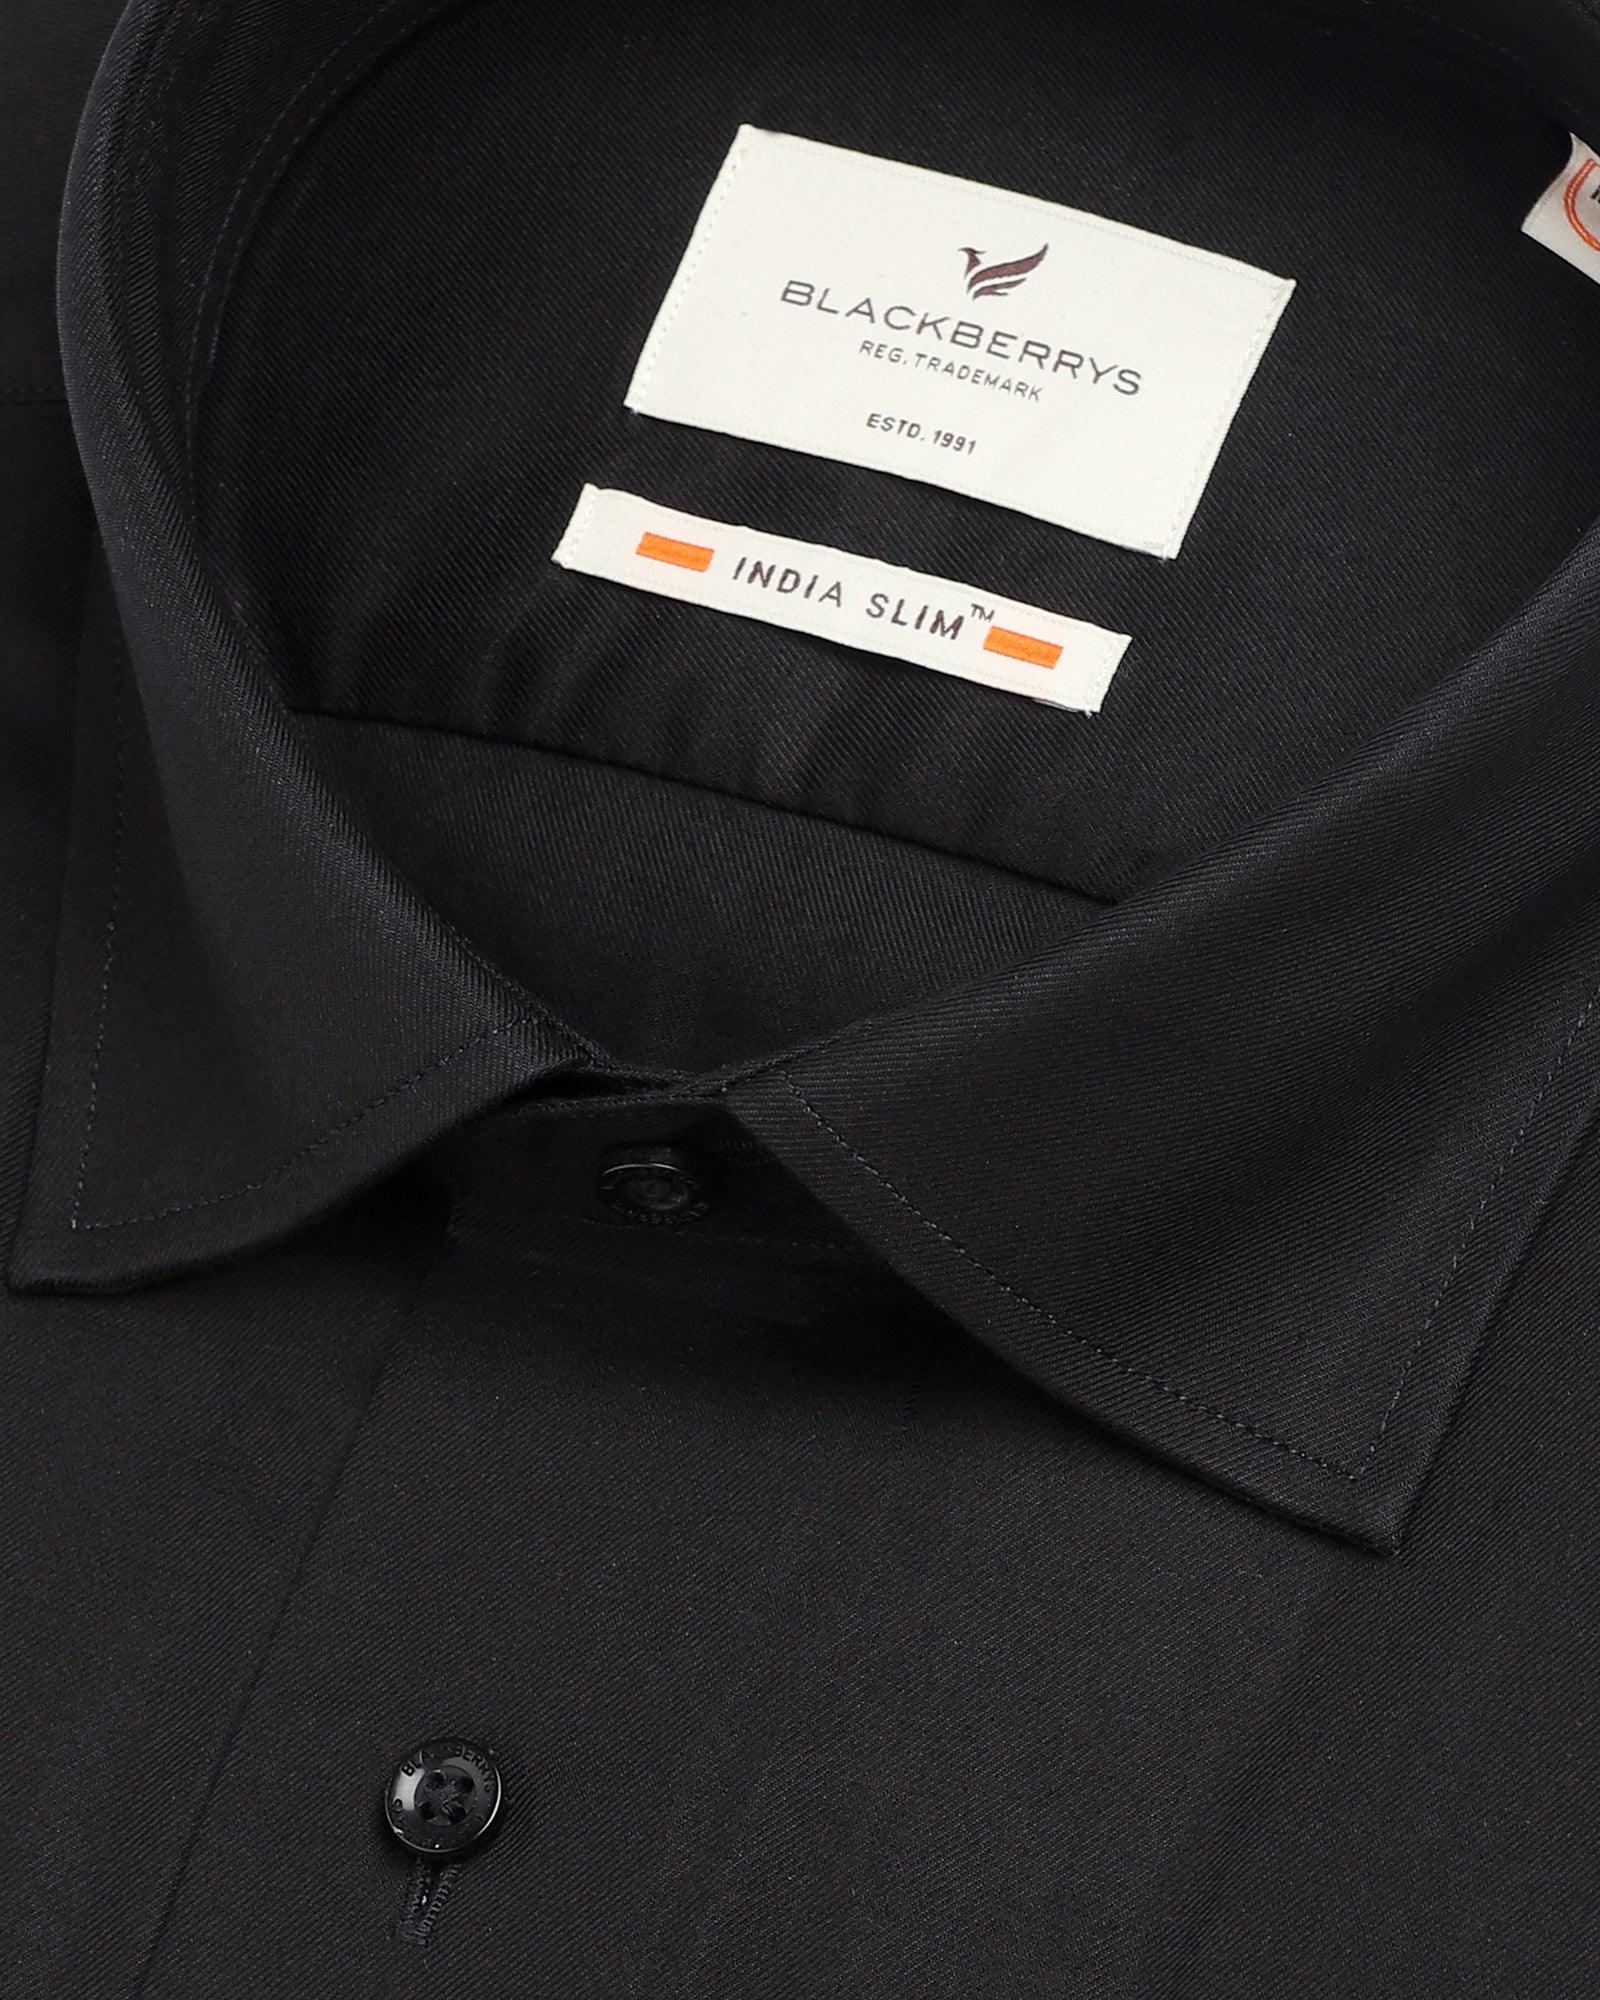 Formal Black Solid Shirt - Vento